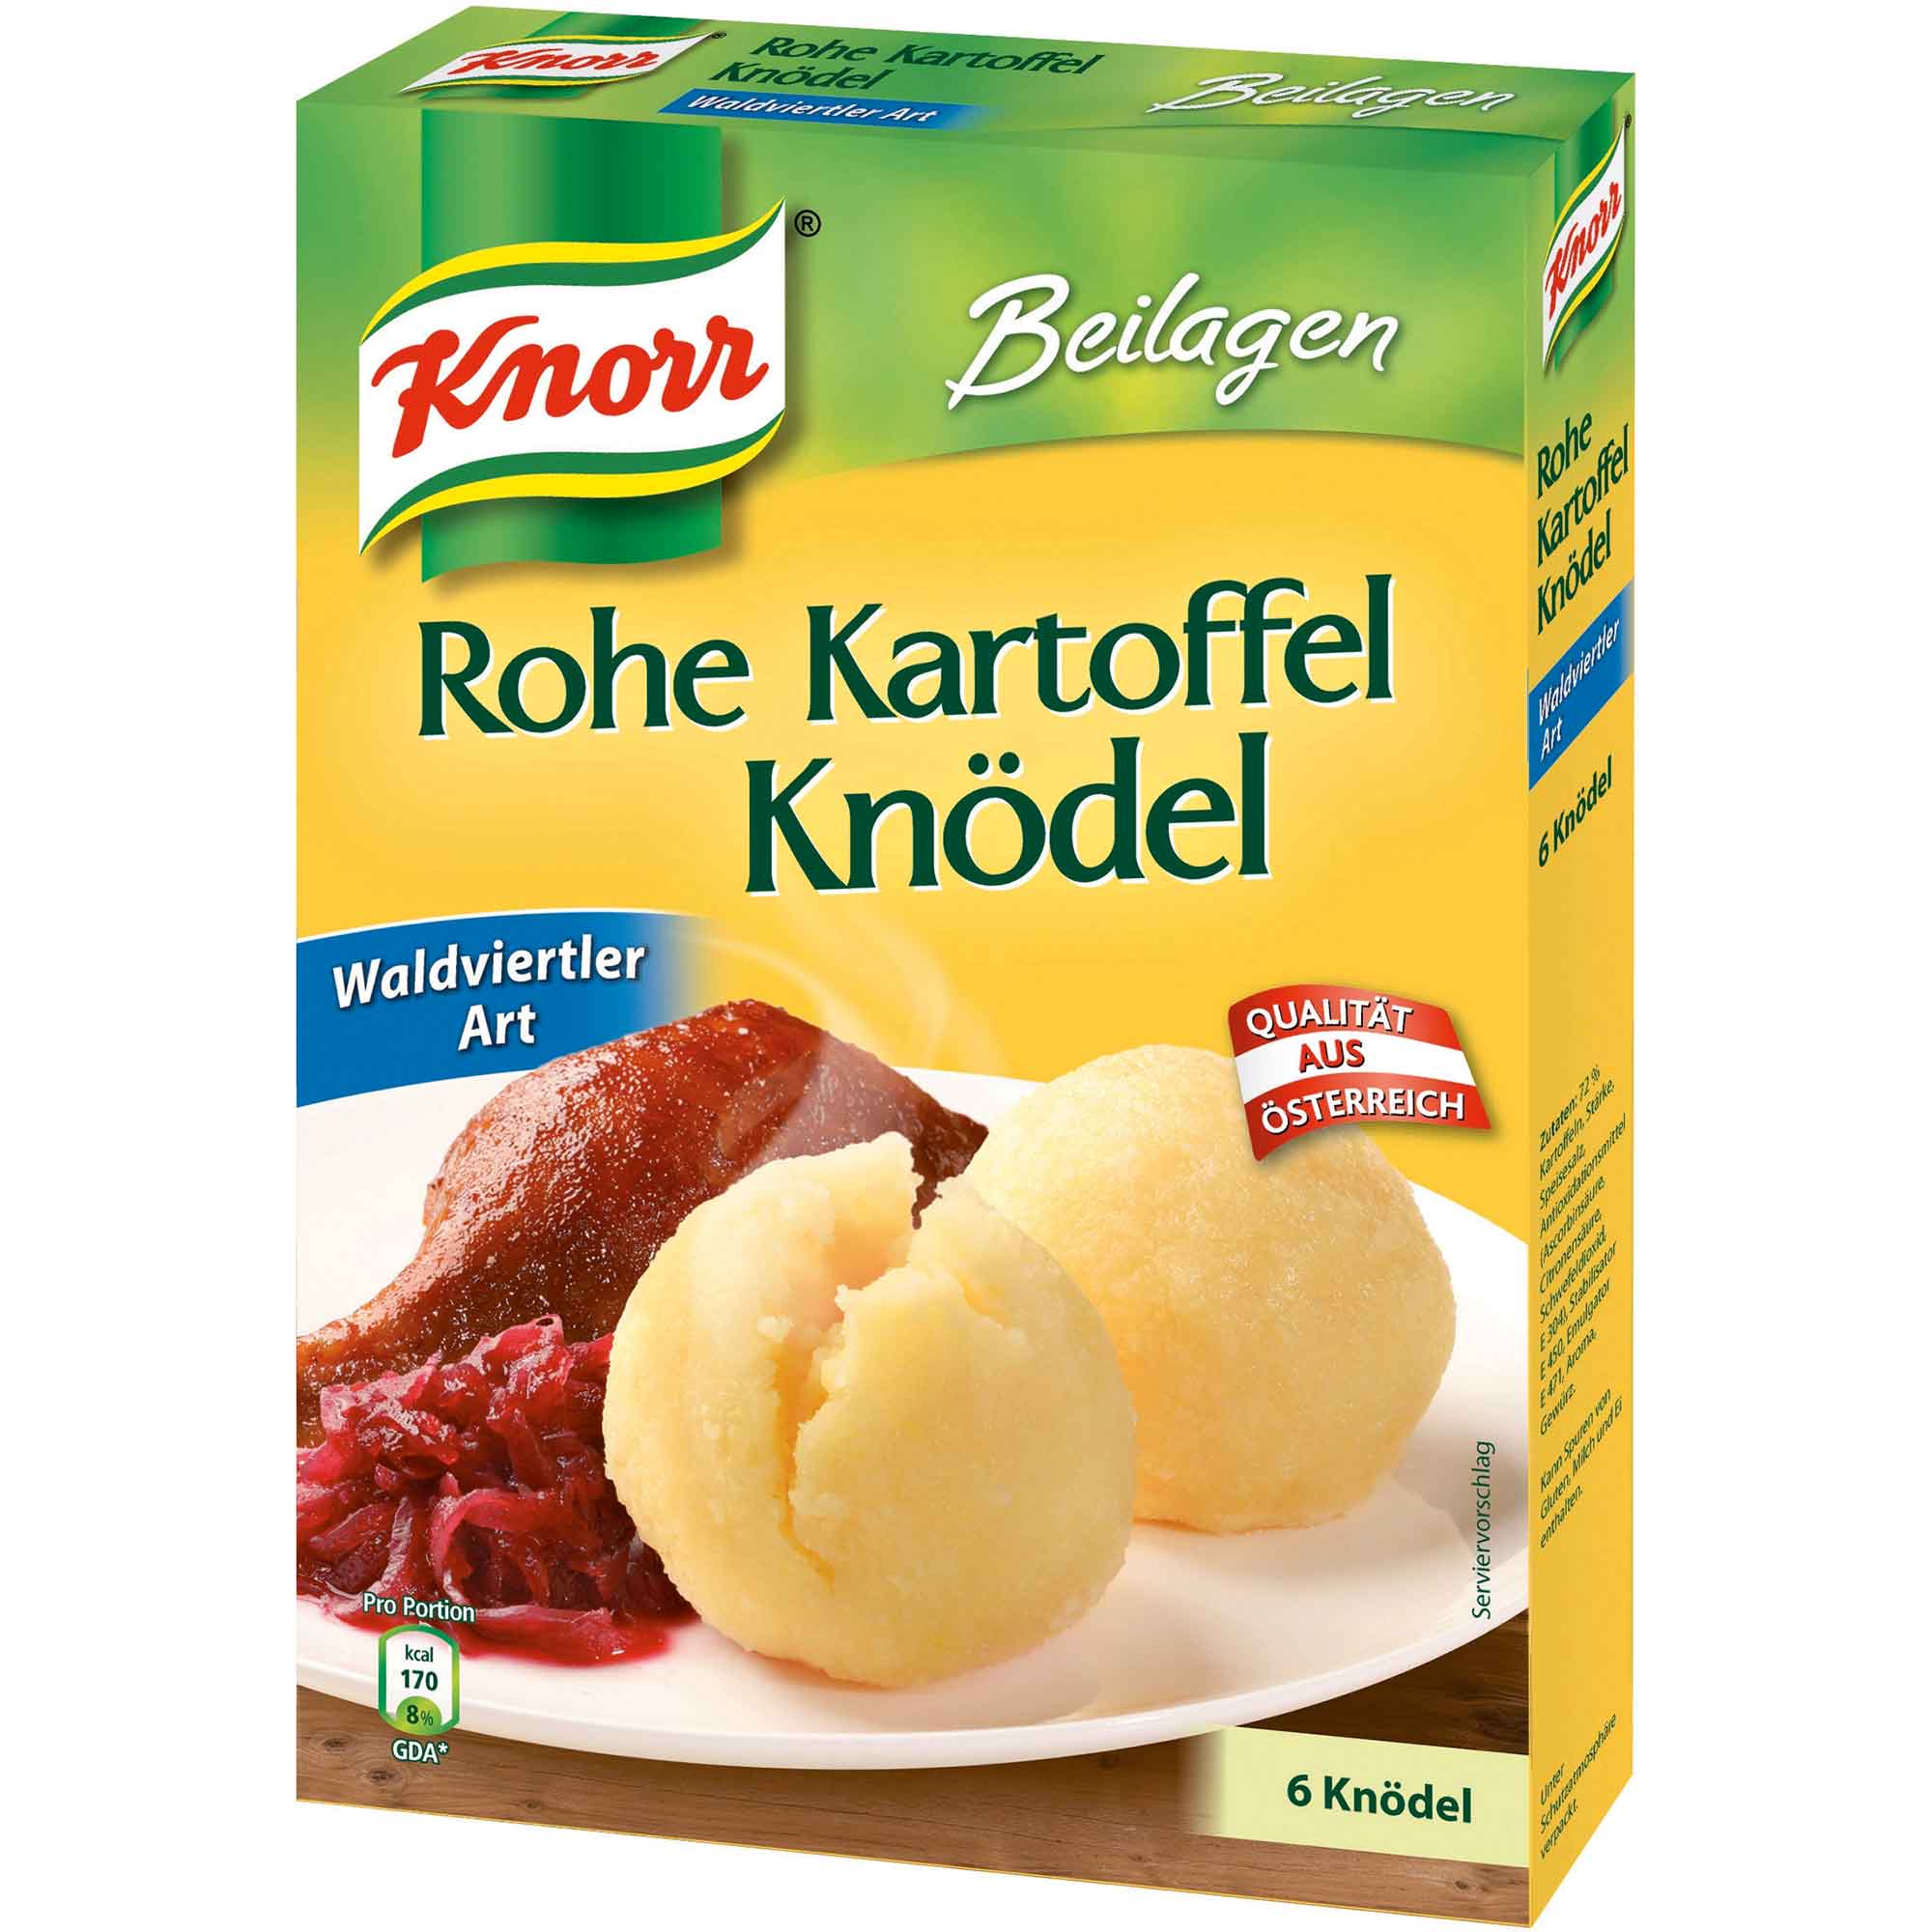 https://www.austriansupermarket.com/media/catalog/product/k/n/knorr-rohe-kartoffel-kn_del-160g.jpg